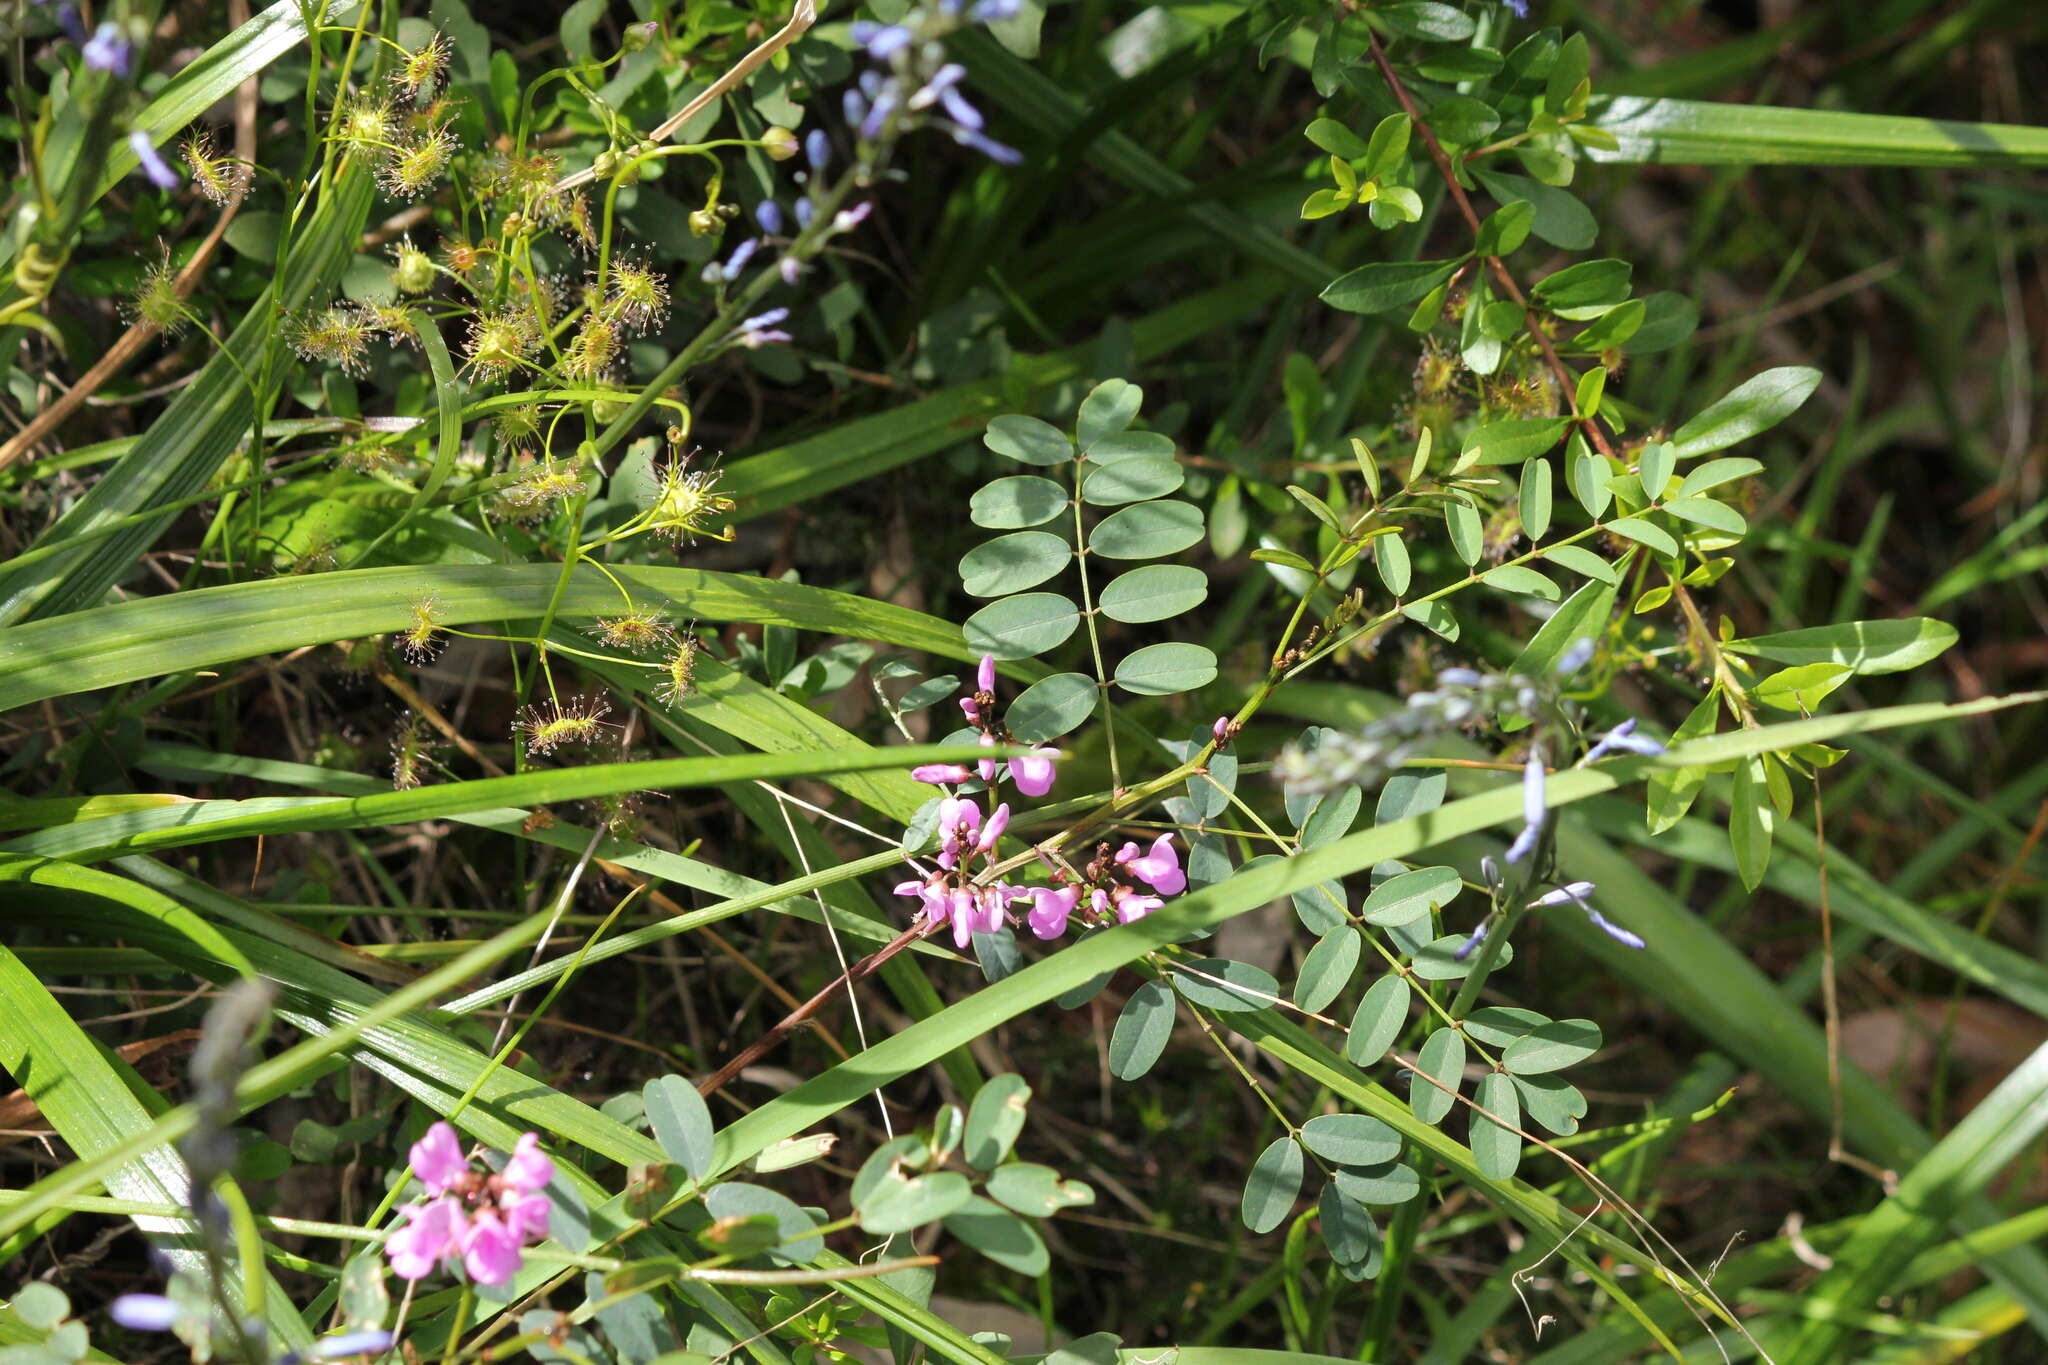 Image de Indigofera australis Willd.